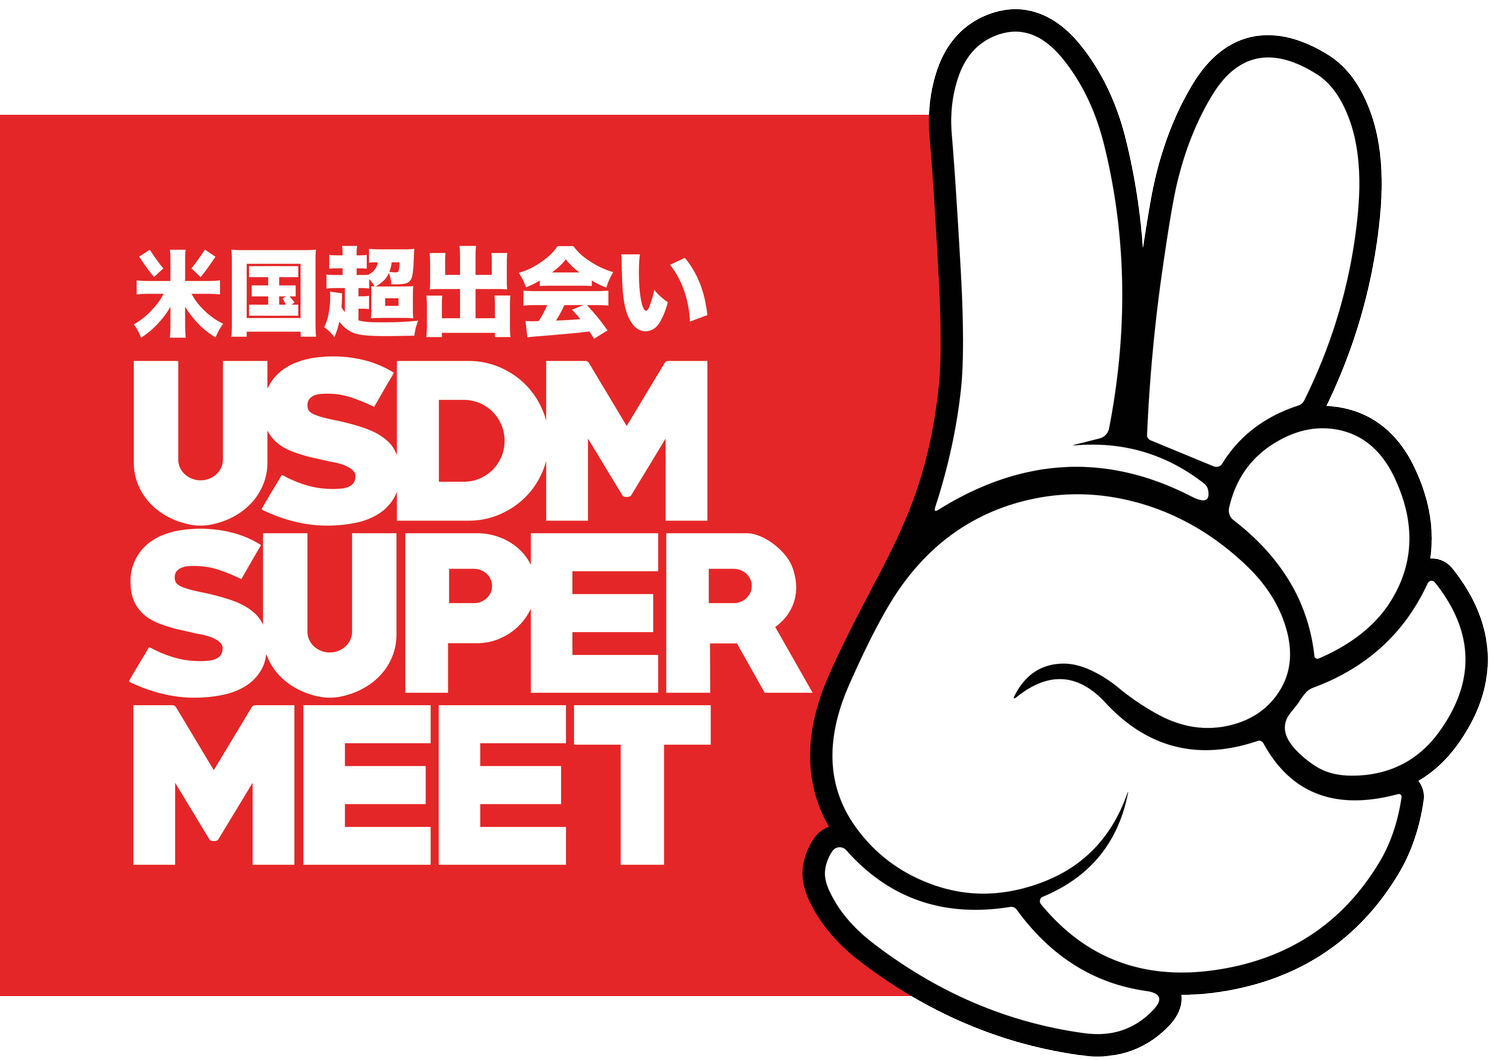 USDM SUPER MEET